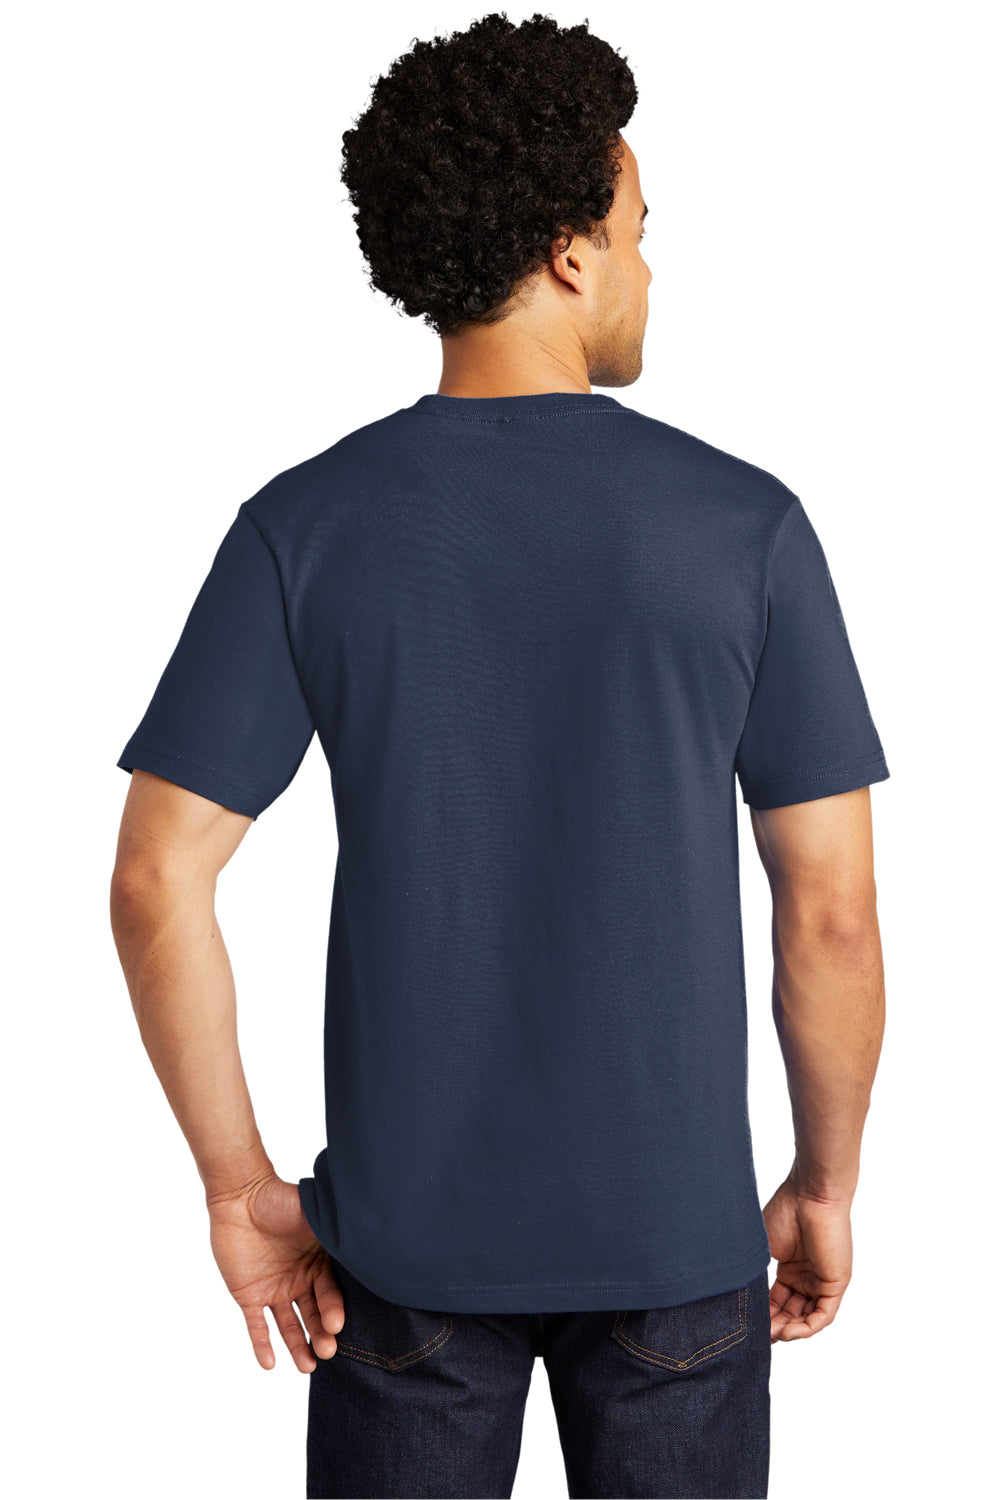 Port & Company Mens Bouncer Short Sleeve Crewneck T-Shirt Navy Blue Side